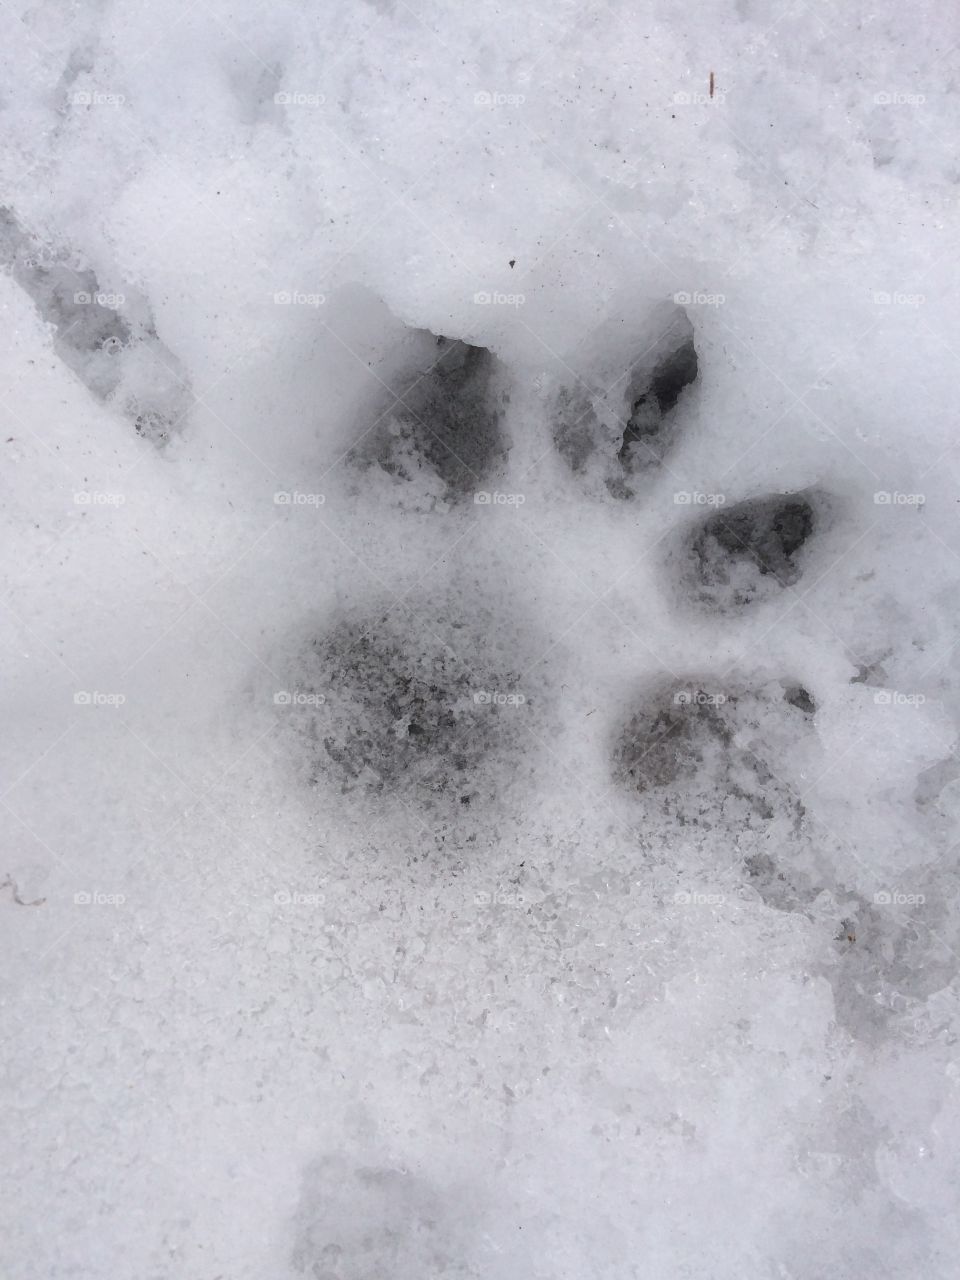 Snowy paw print
